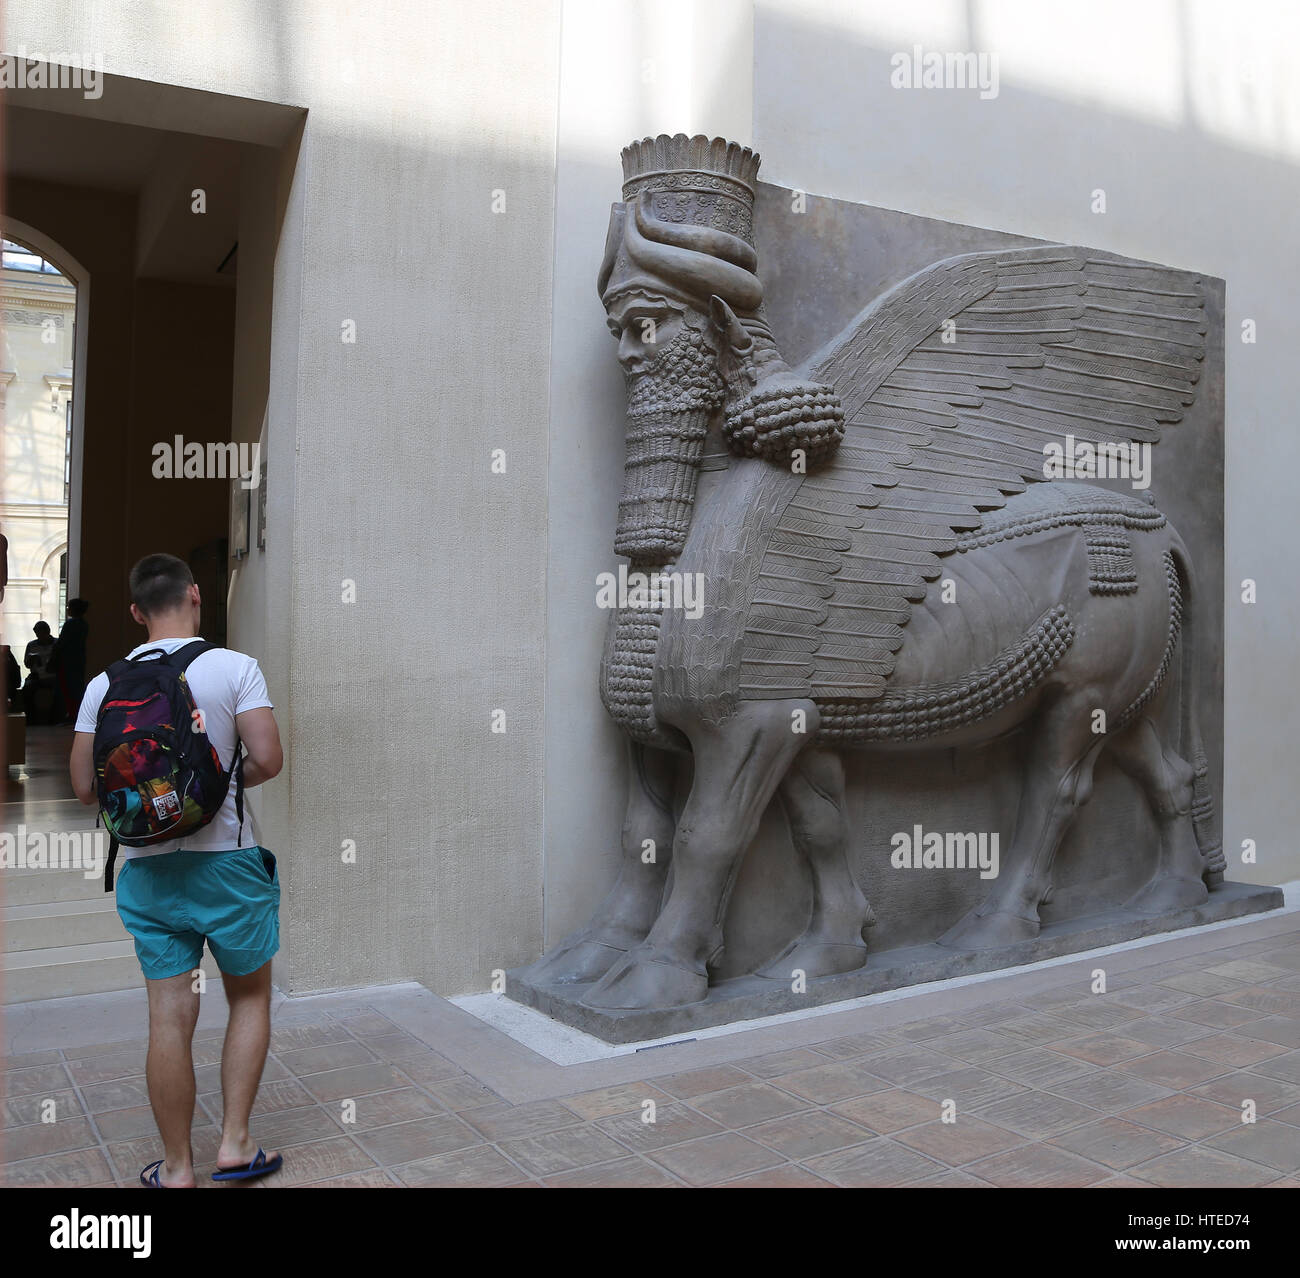 Lamassu dal palazzo di Sargon II Gli Assiri. 721-705 A.C. Khorsabad Palace. Il museo del Louvre. Parigi. La Francia. Foto Stock